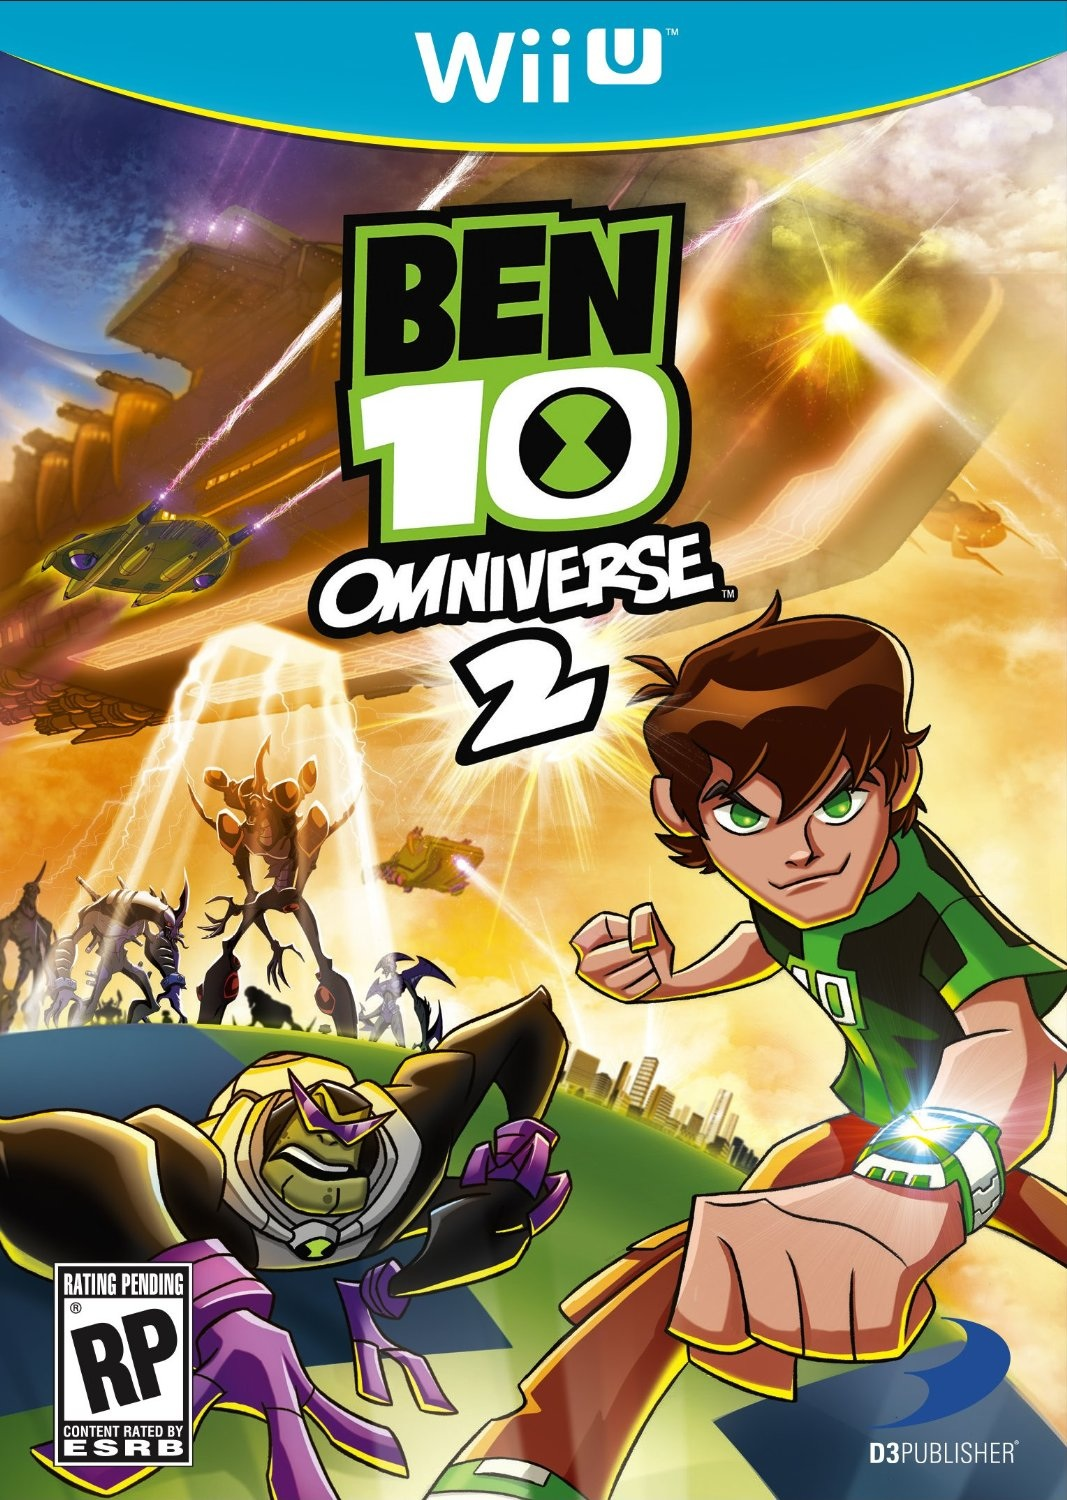 BEN 10 POWER JUMP jogo online gratuito em